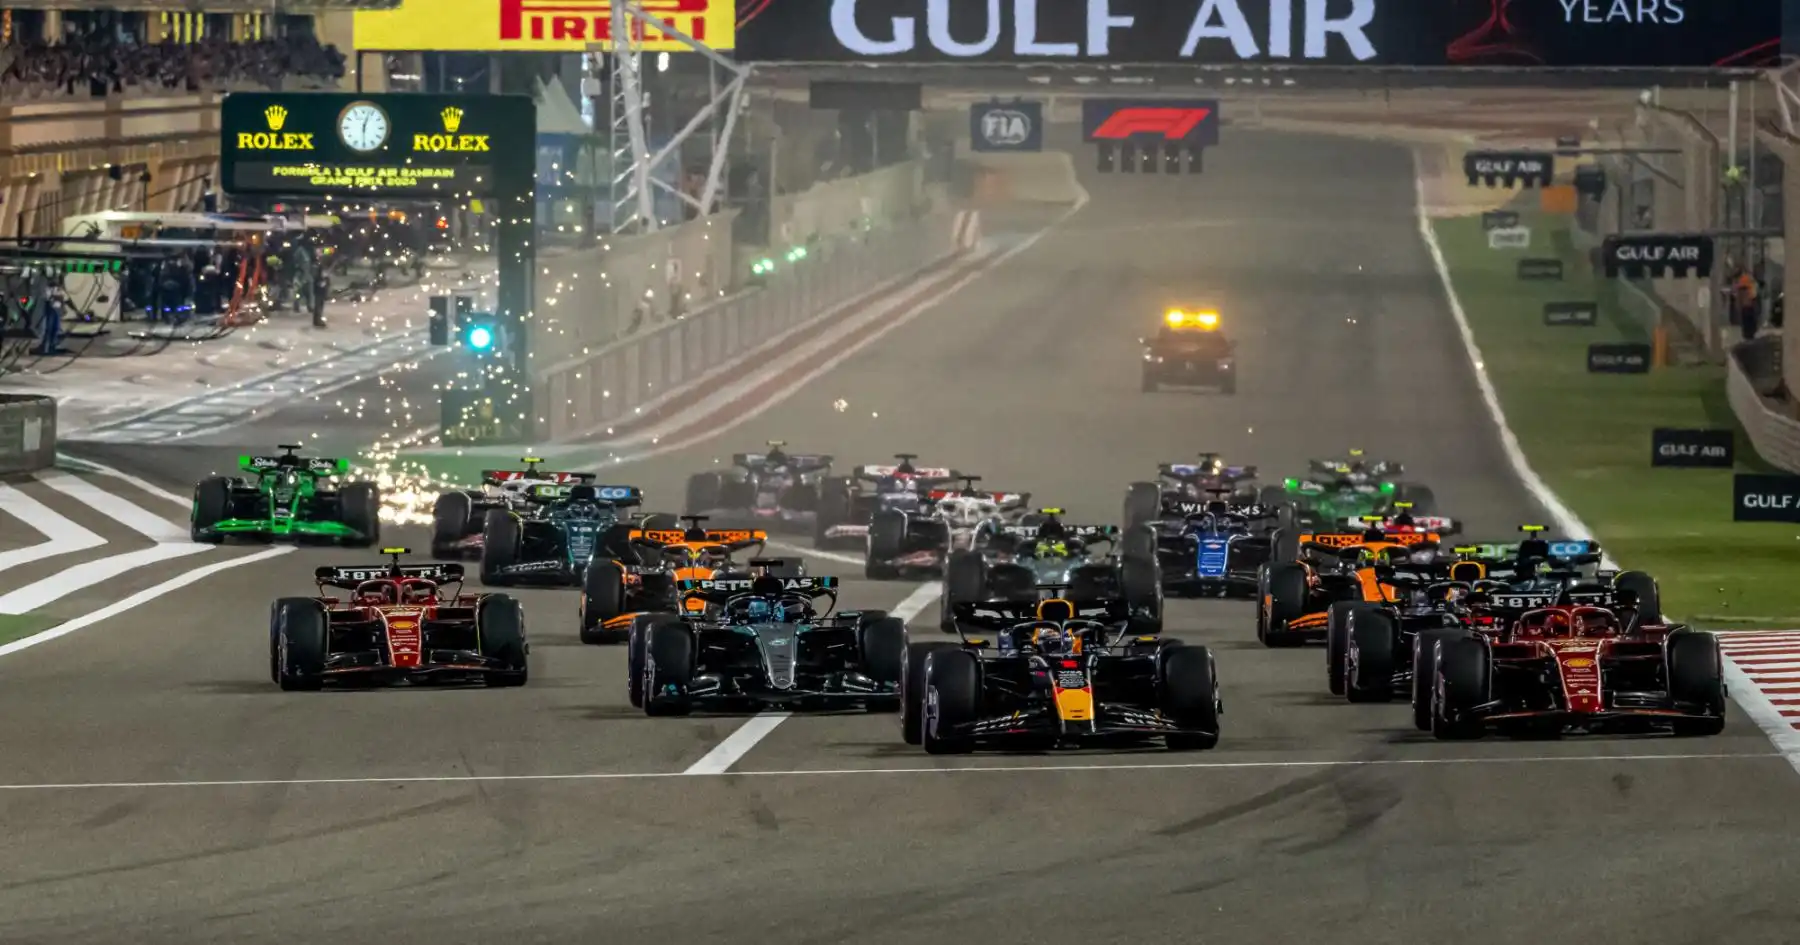 Bahrain Grand Prix organizers discuss potential permanent race change with Formula 1